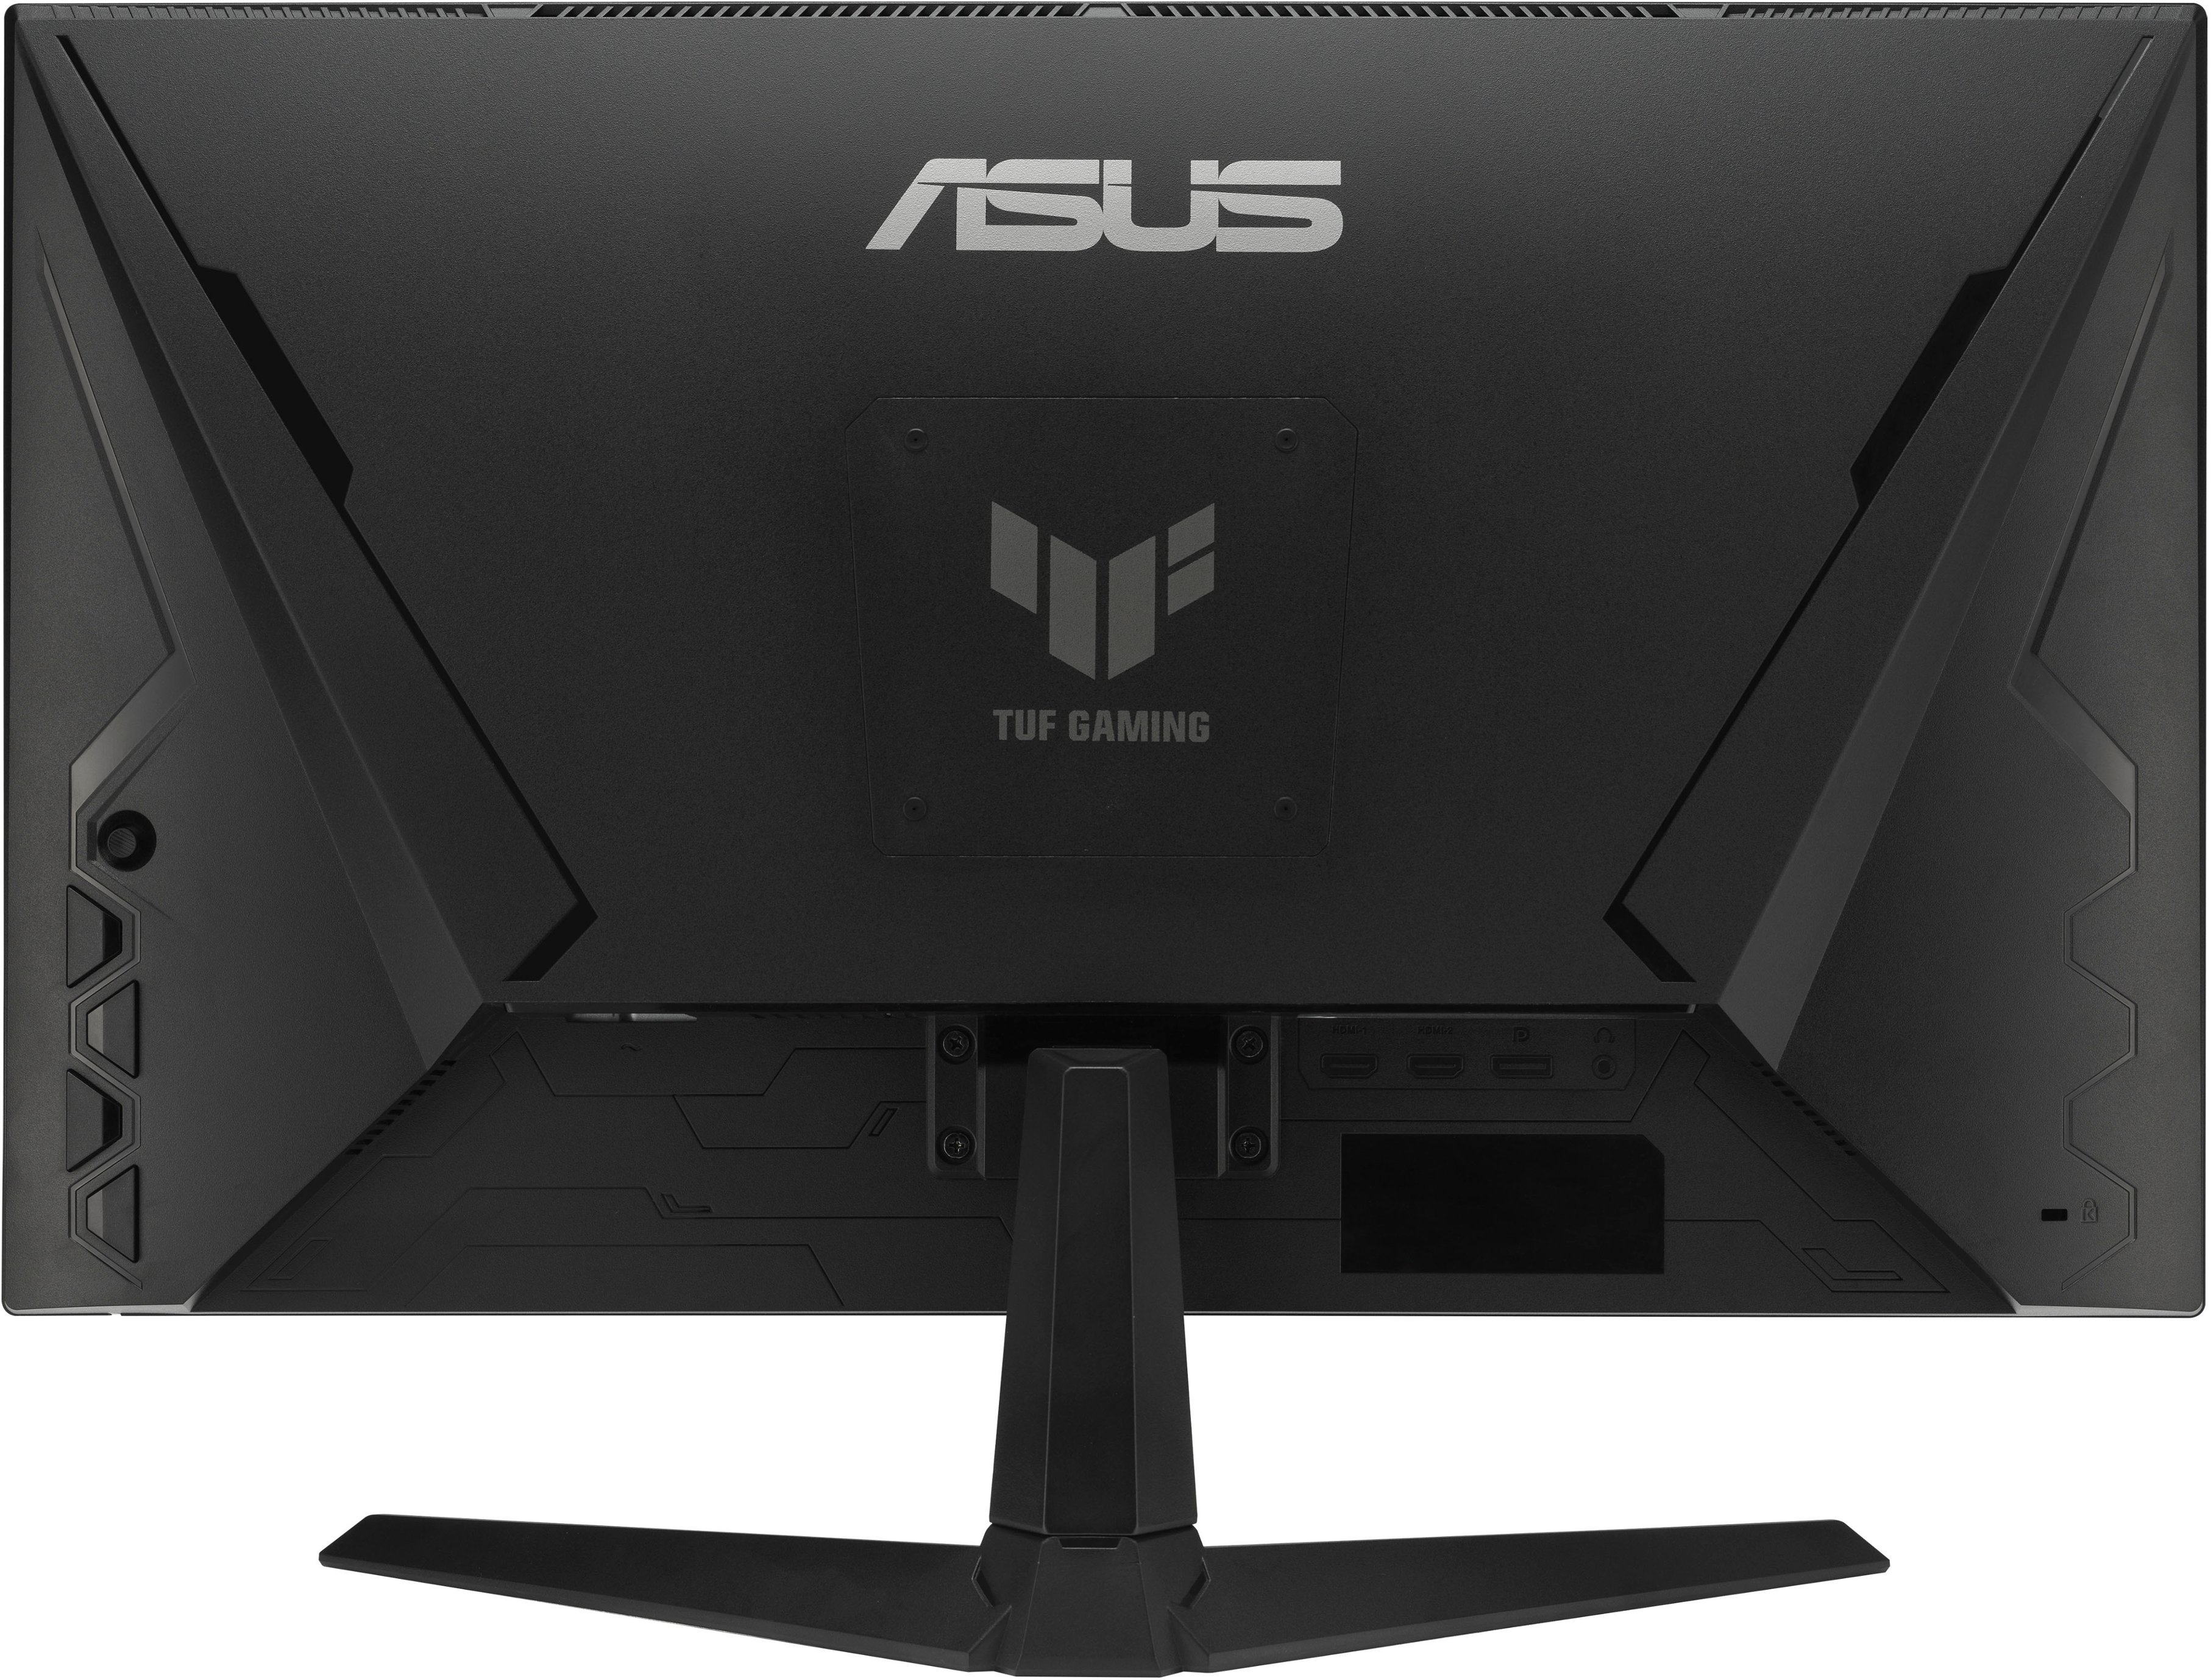 Back View: ASUS - TUF Gaming 27" IPS FHD 1080P 180Hz 1ms FreeSync Premium Gaming Monitor (DisplayPort, HDMI) - Black